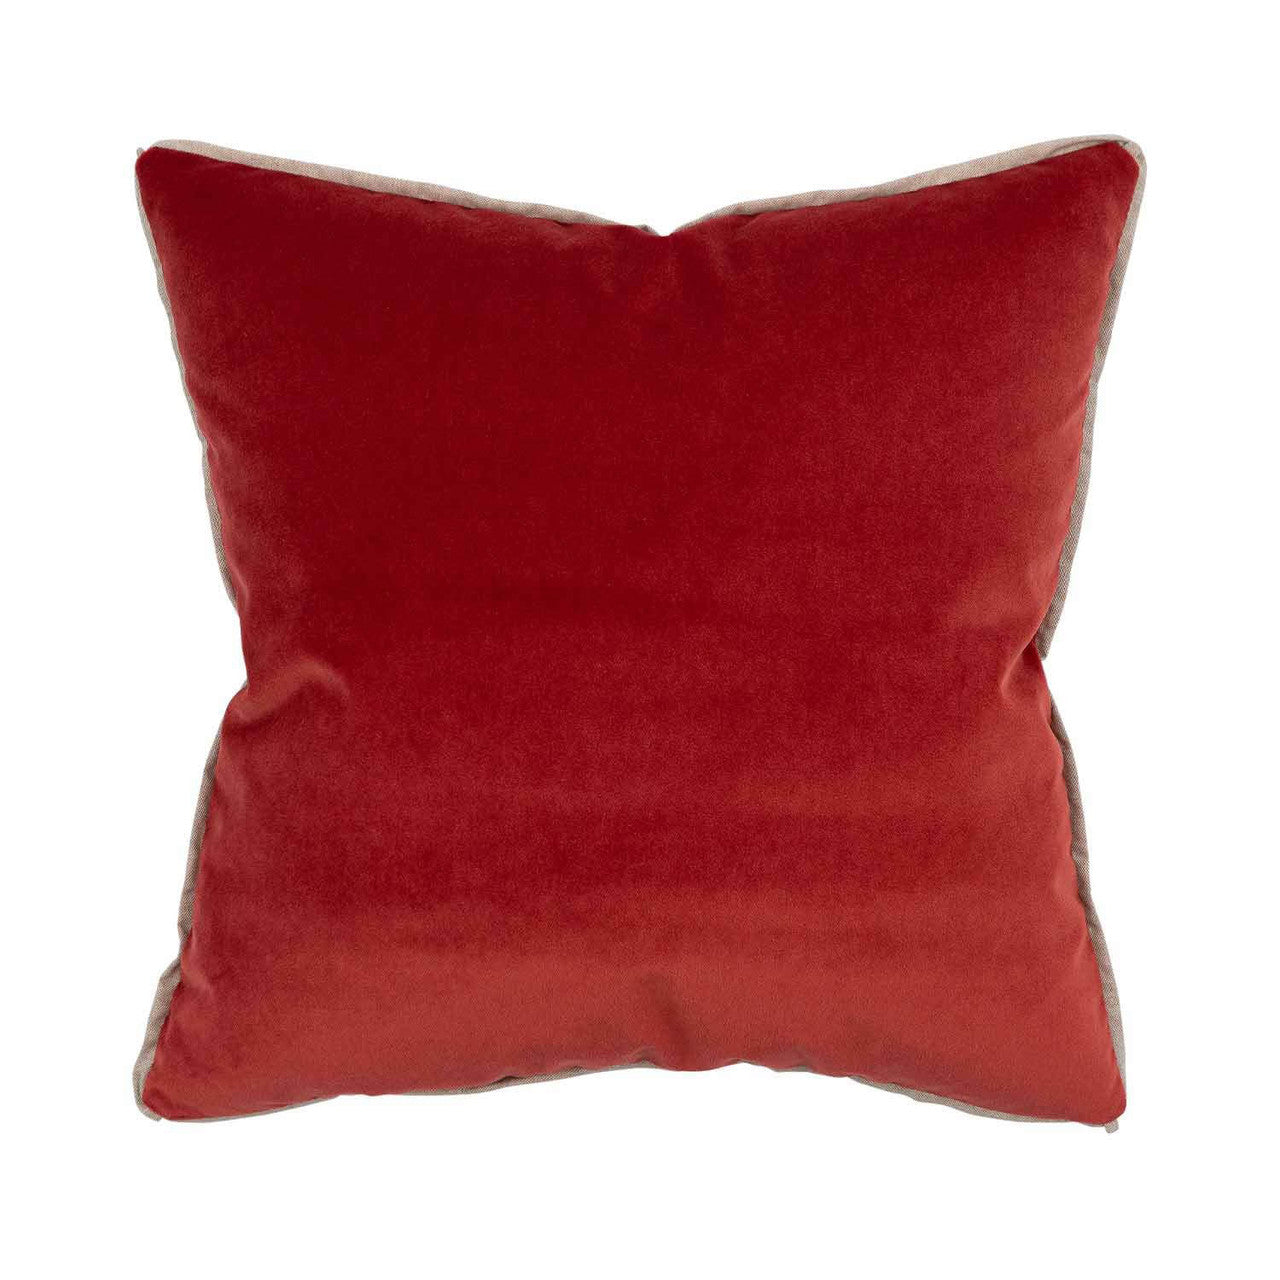 Banks Pillow in Pompeii